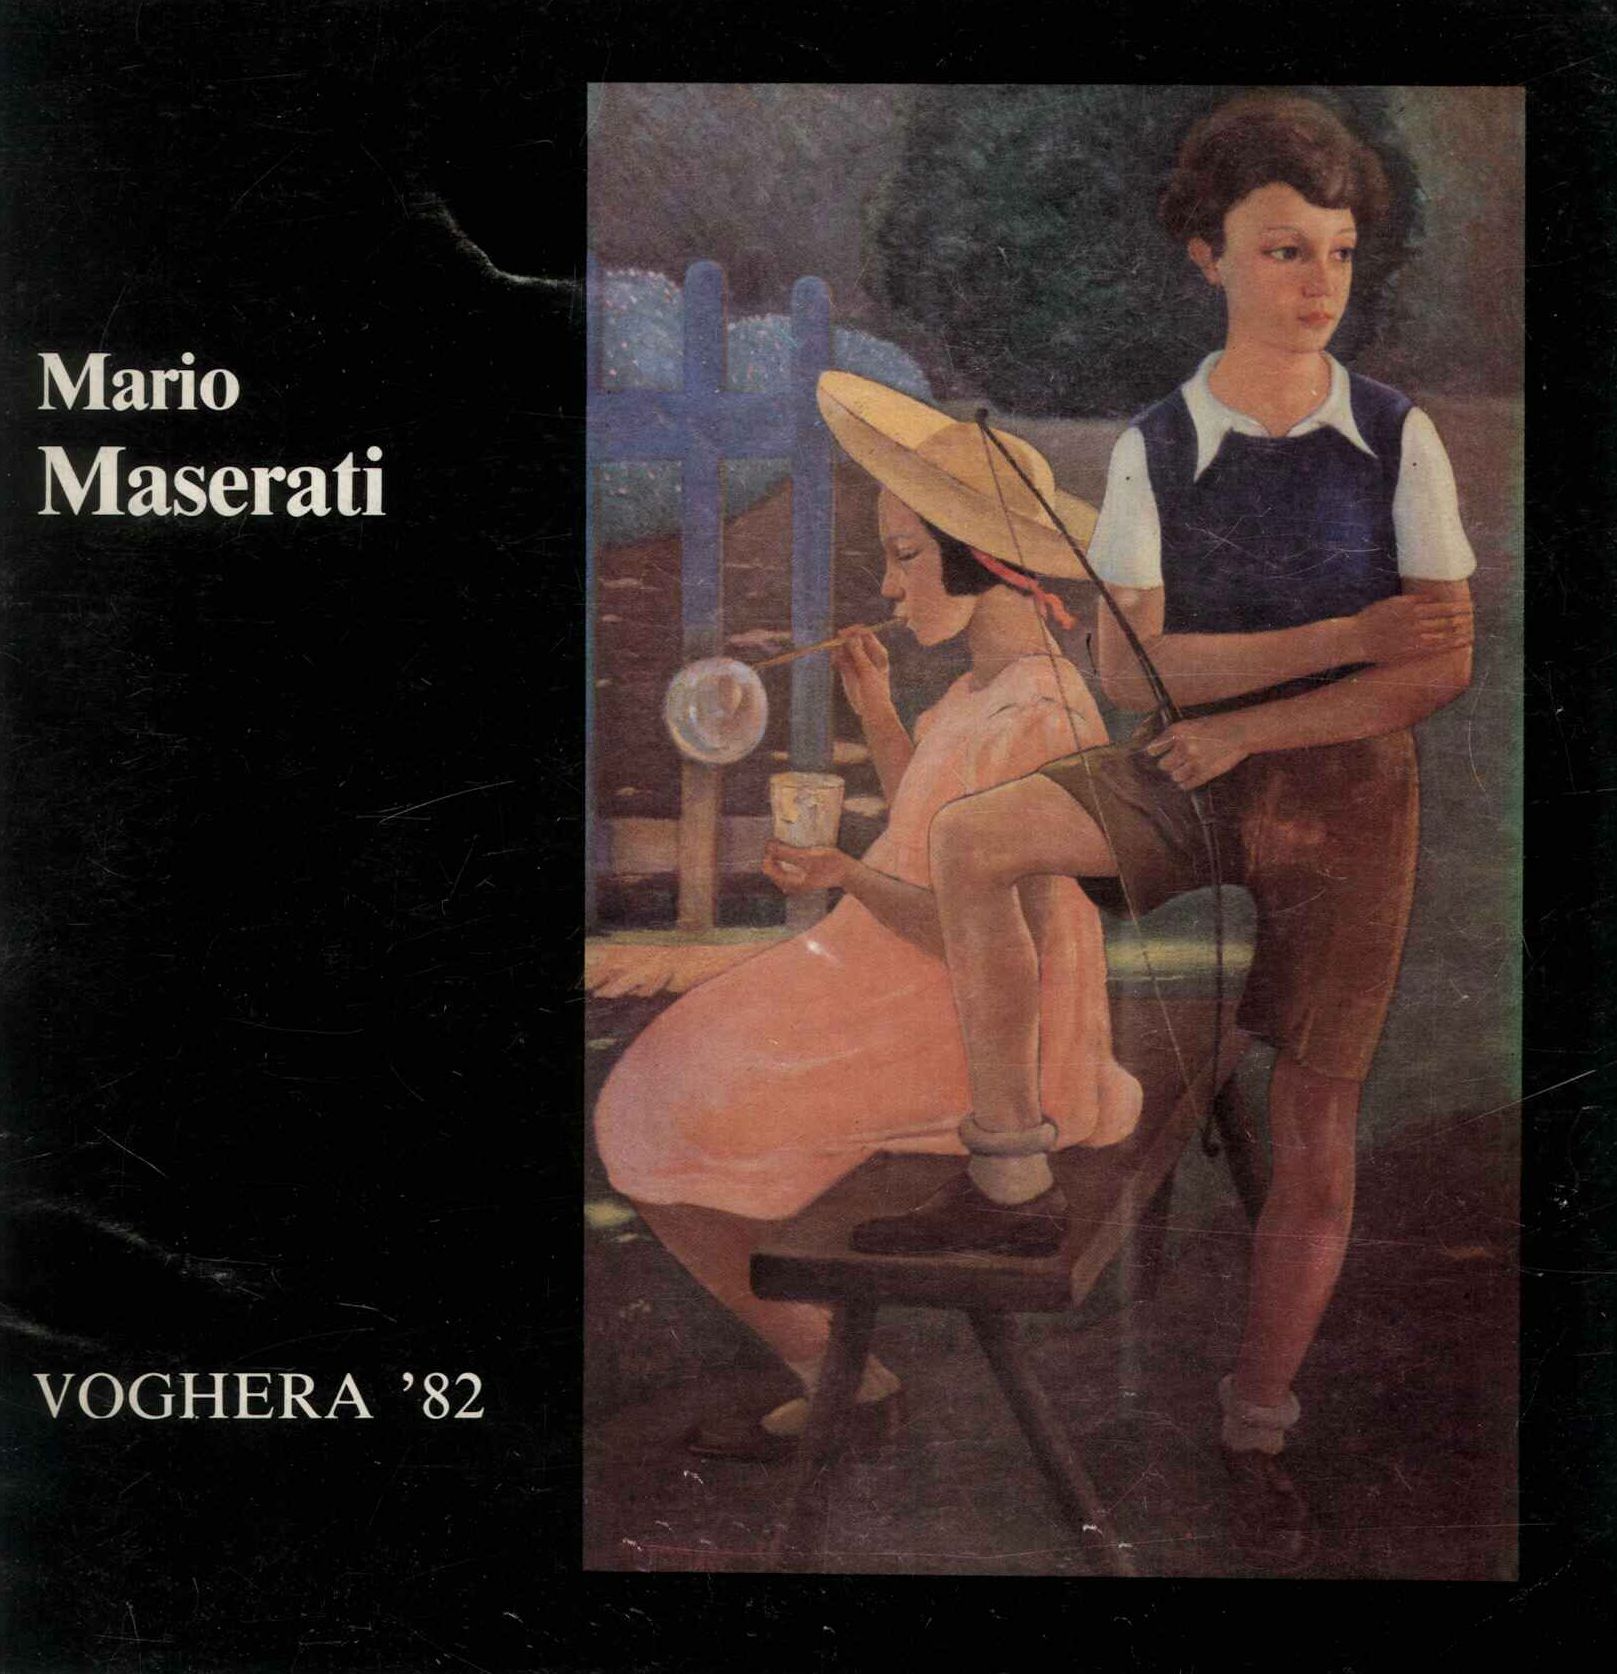 Mario Maserati